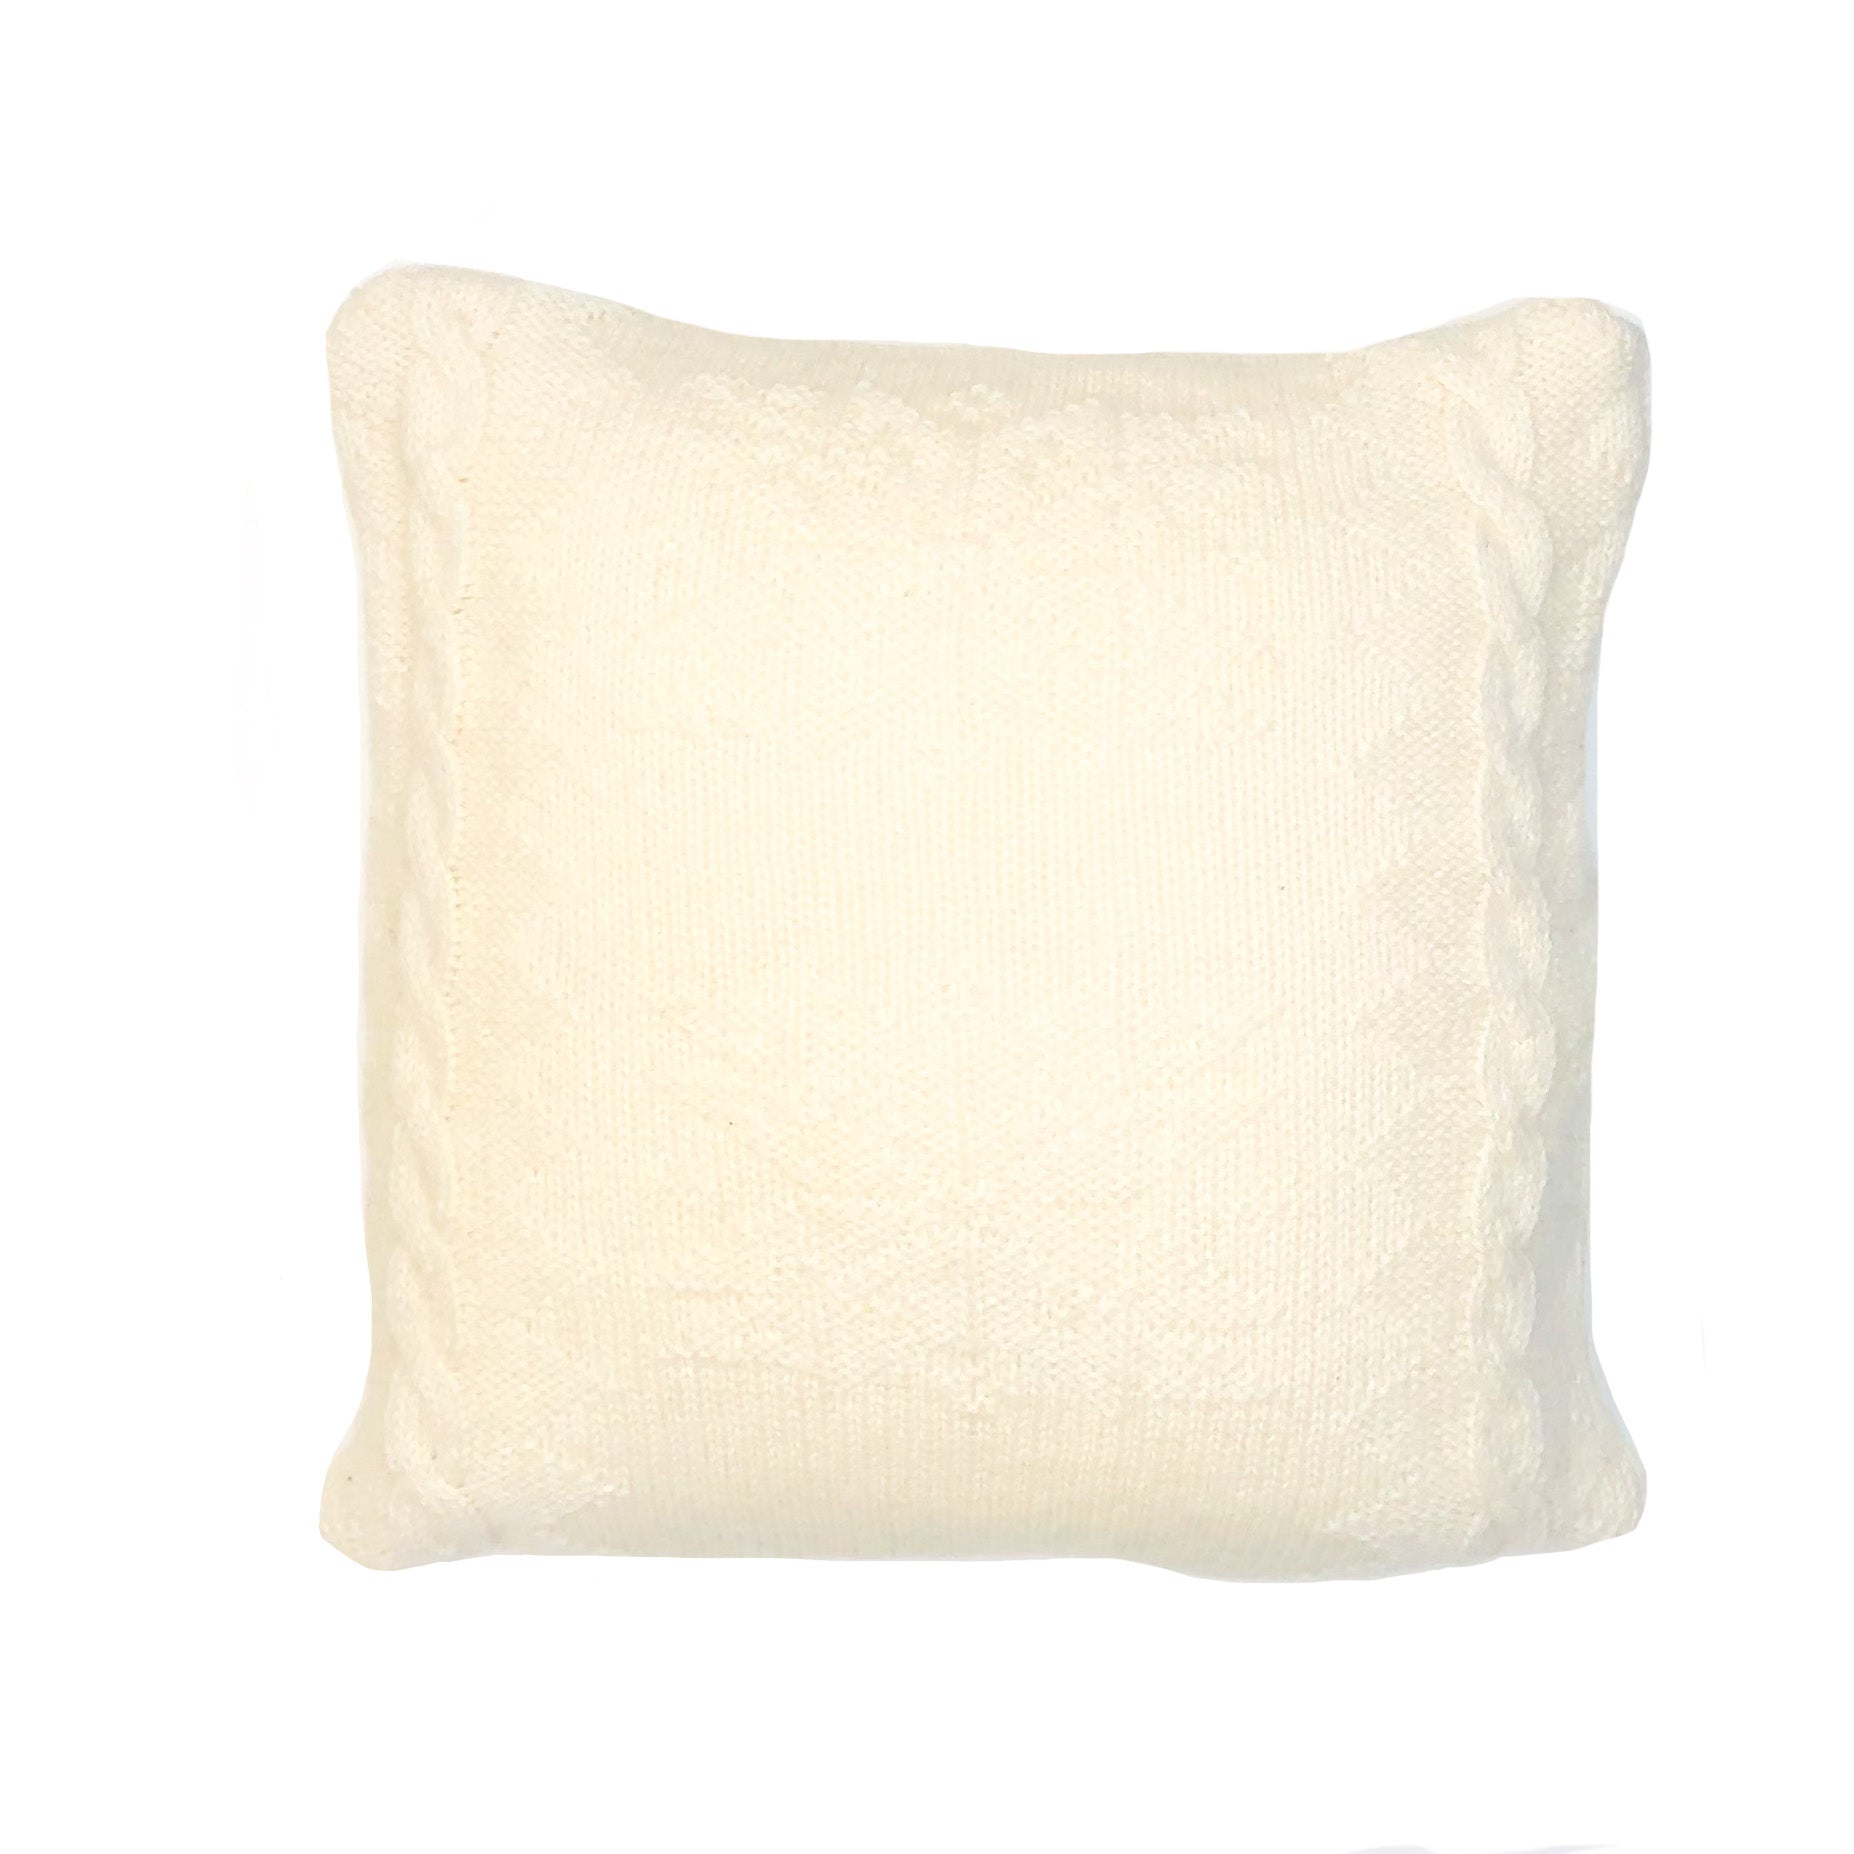 14 x 14 Cream Wool Pillow Cover - Love Woolies